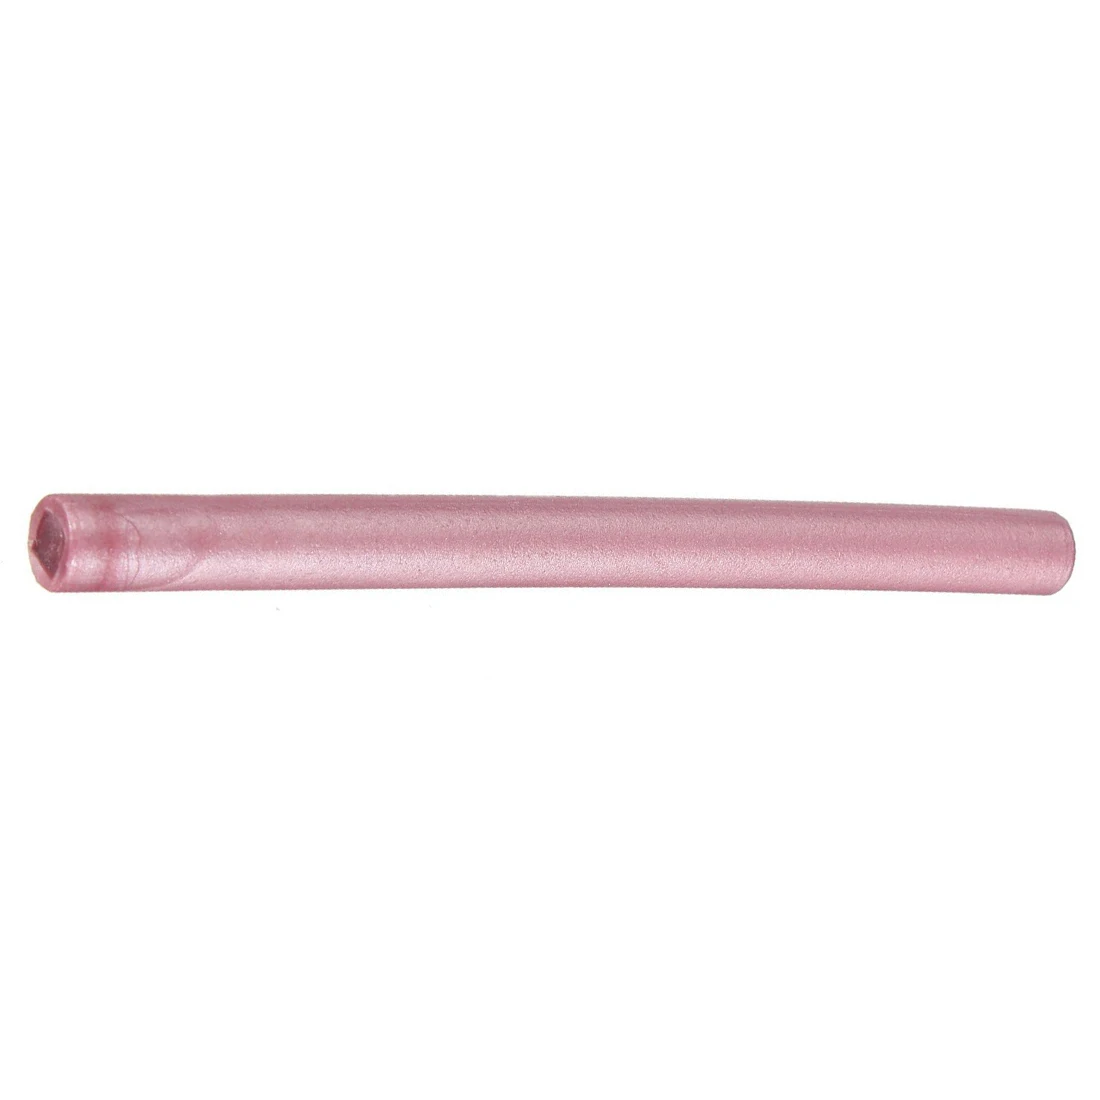 1 шт. воск штамп Baton Stick Винтаж гибкий круглый для печати письмо пост, принцесса розовый